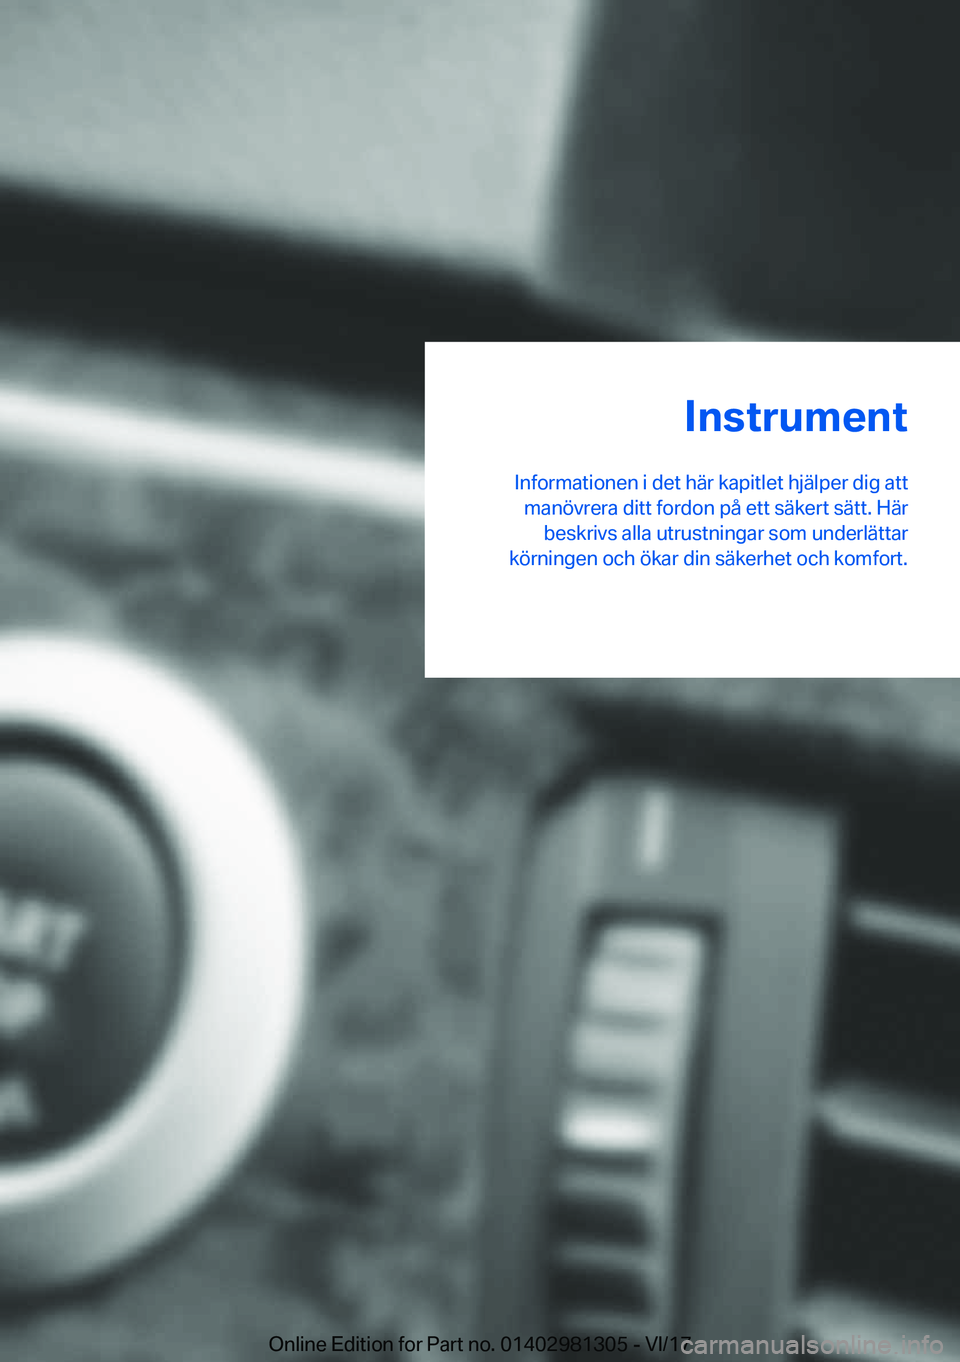 BMW X4 2018  InstruktionsbÖcker (in Swedish) �I�n�s�t�r�u�m�e�n�t
�I�n�f�o�r�m�a�t�i�o�n�e�n� �i� �d�e�t� �h�ä�r� �k�a�p�i�t�l�e�t� �h�j�ä�l�p�e�r� �d�i�g� �a�t�t �m�a�n�